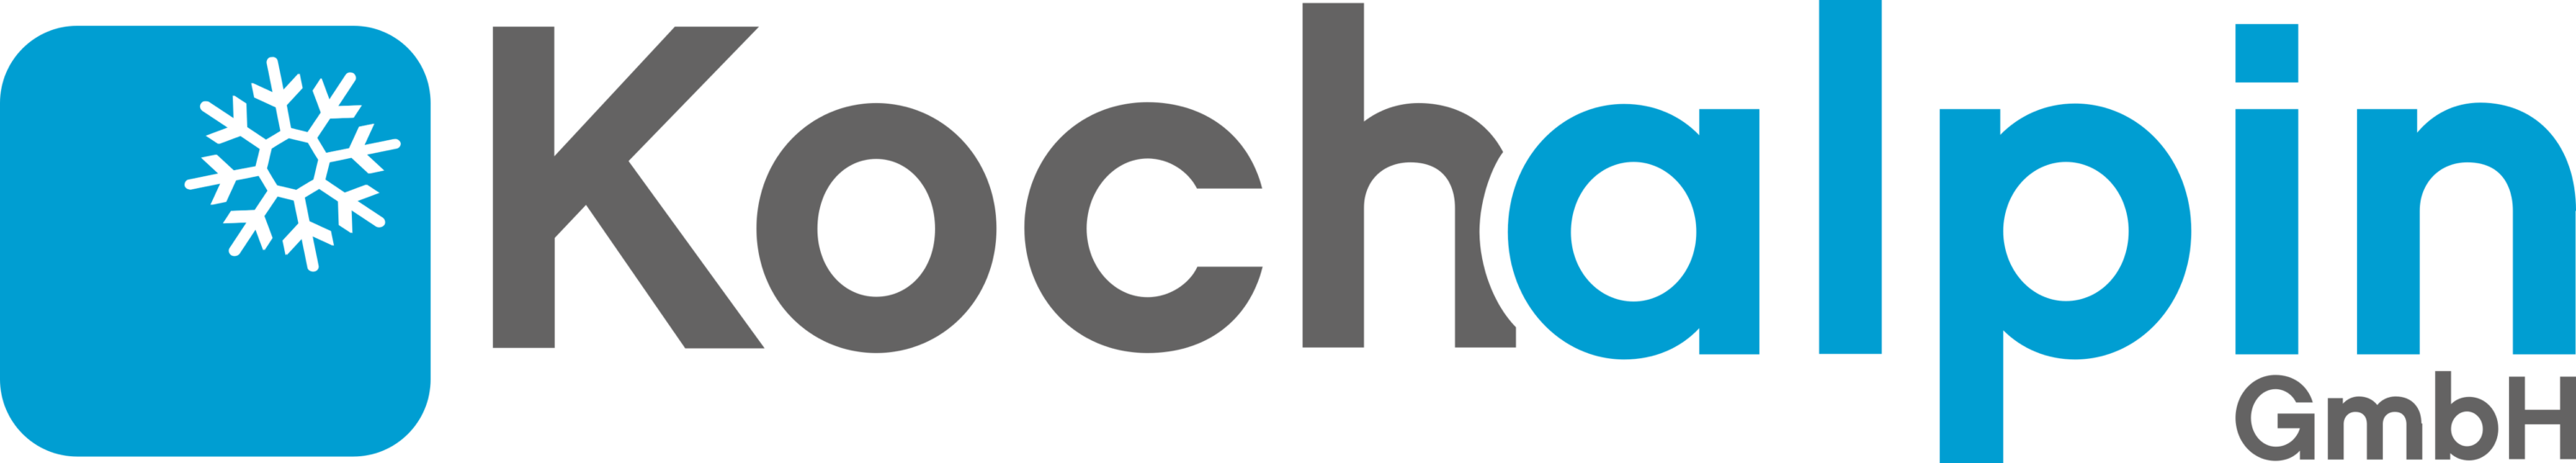 Koch Alpin GmbH Logo